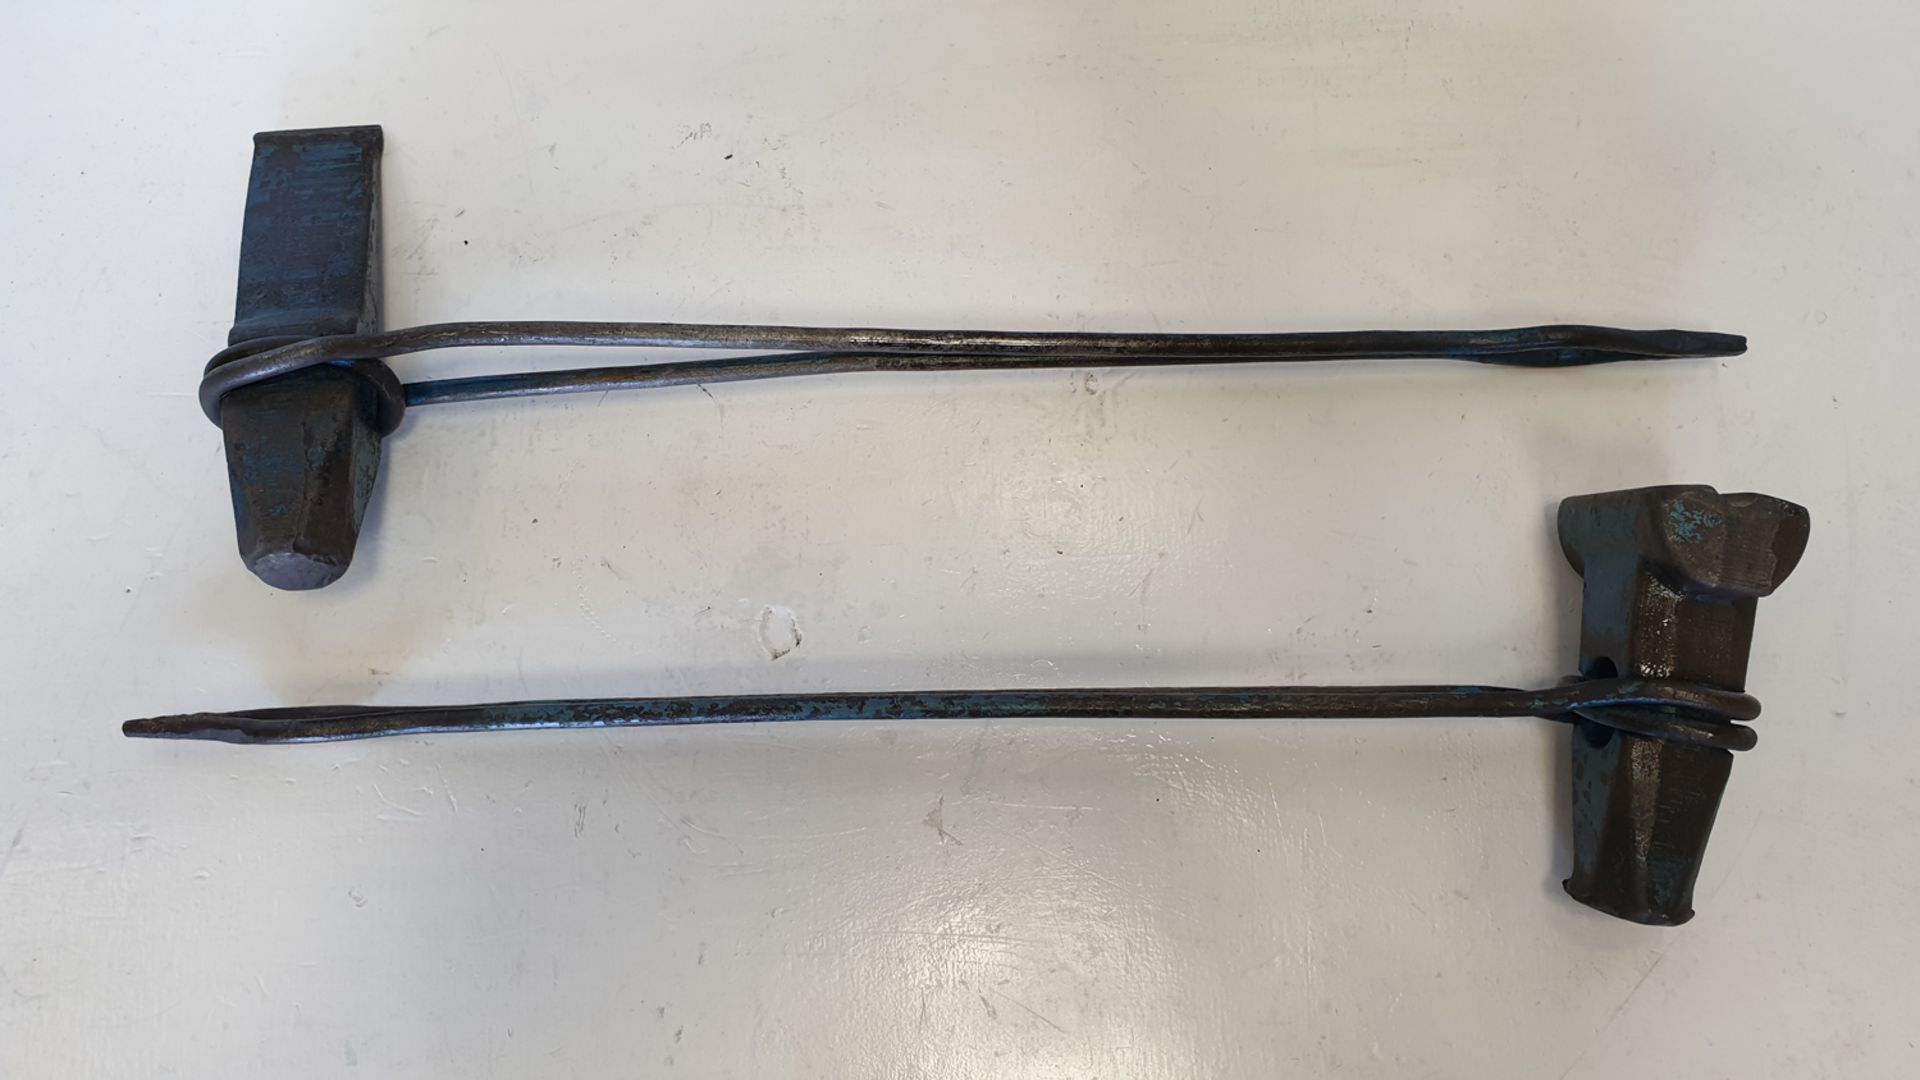 2 Blacksmith Forming Tools. - Image 4 of 4